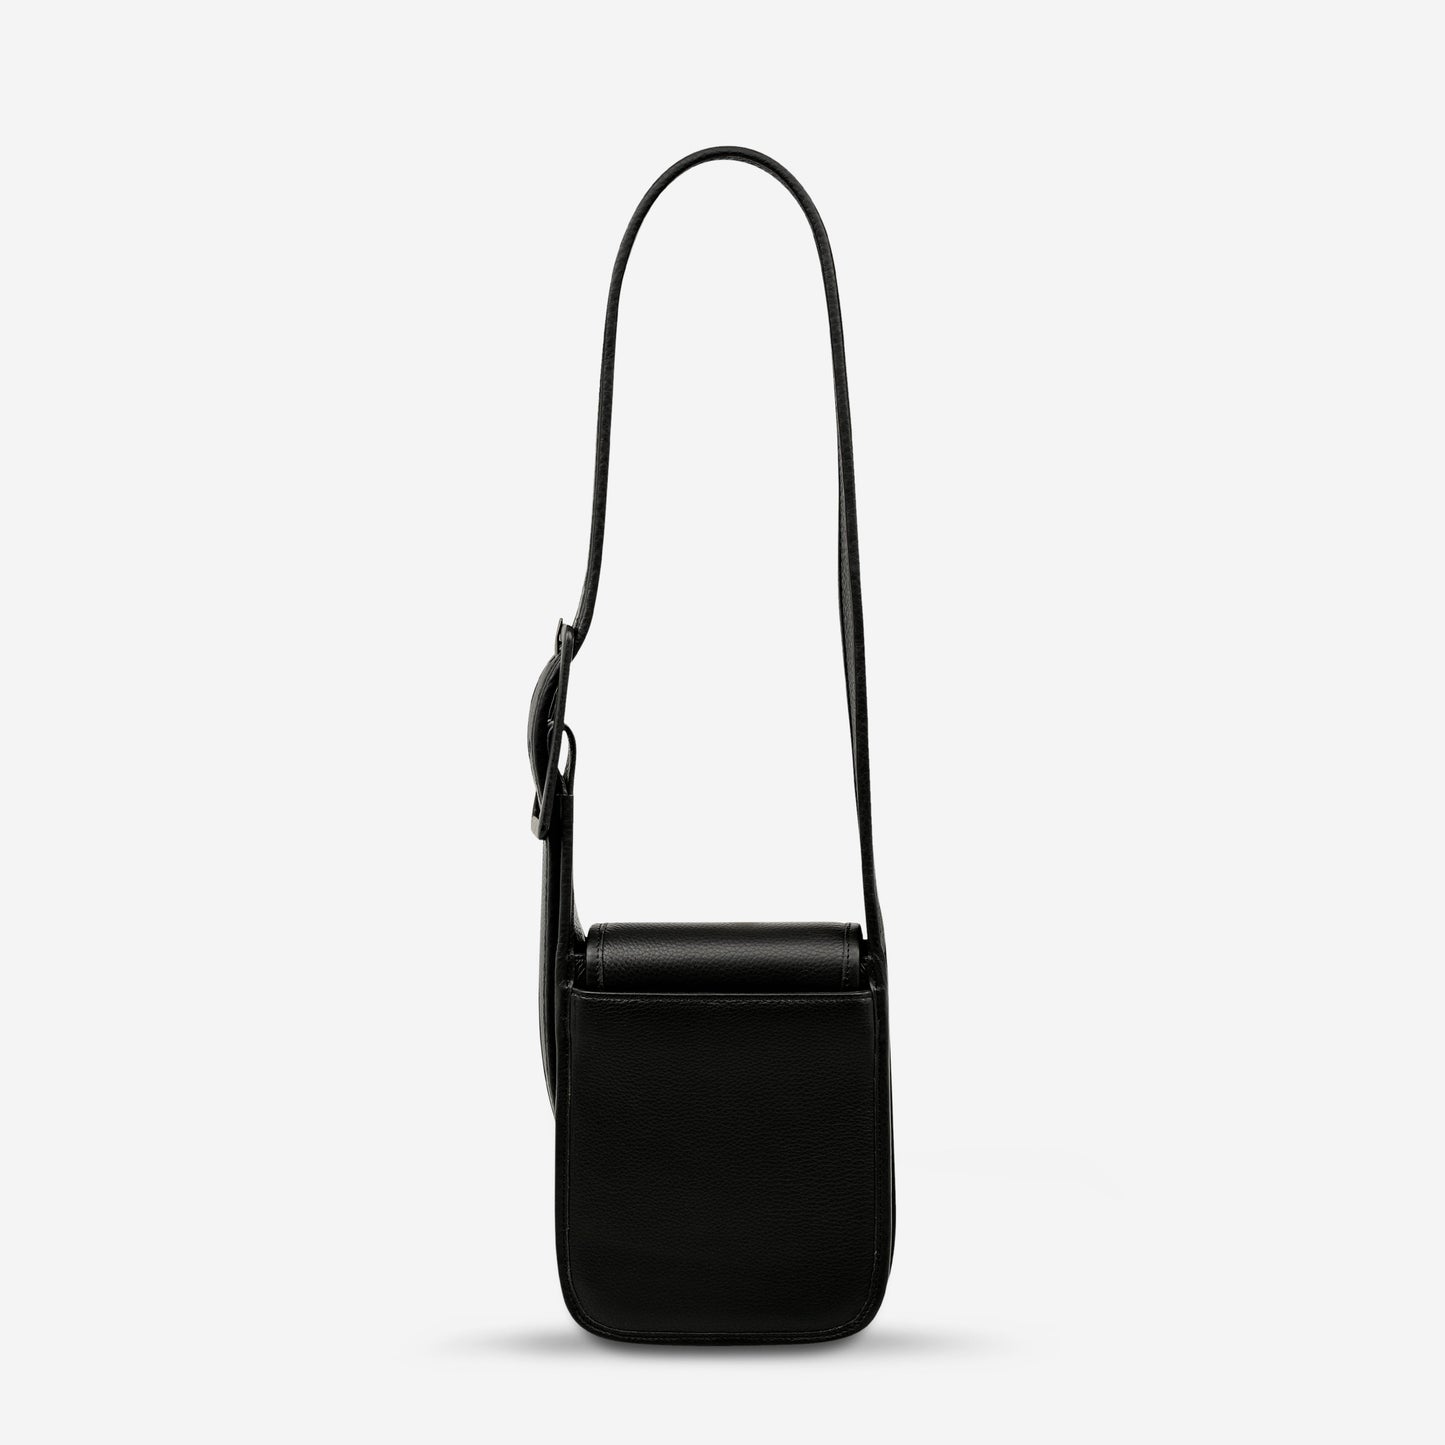 Perplex Leather Bag - Black